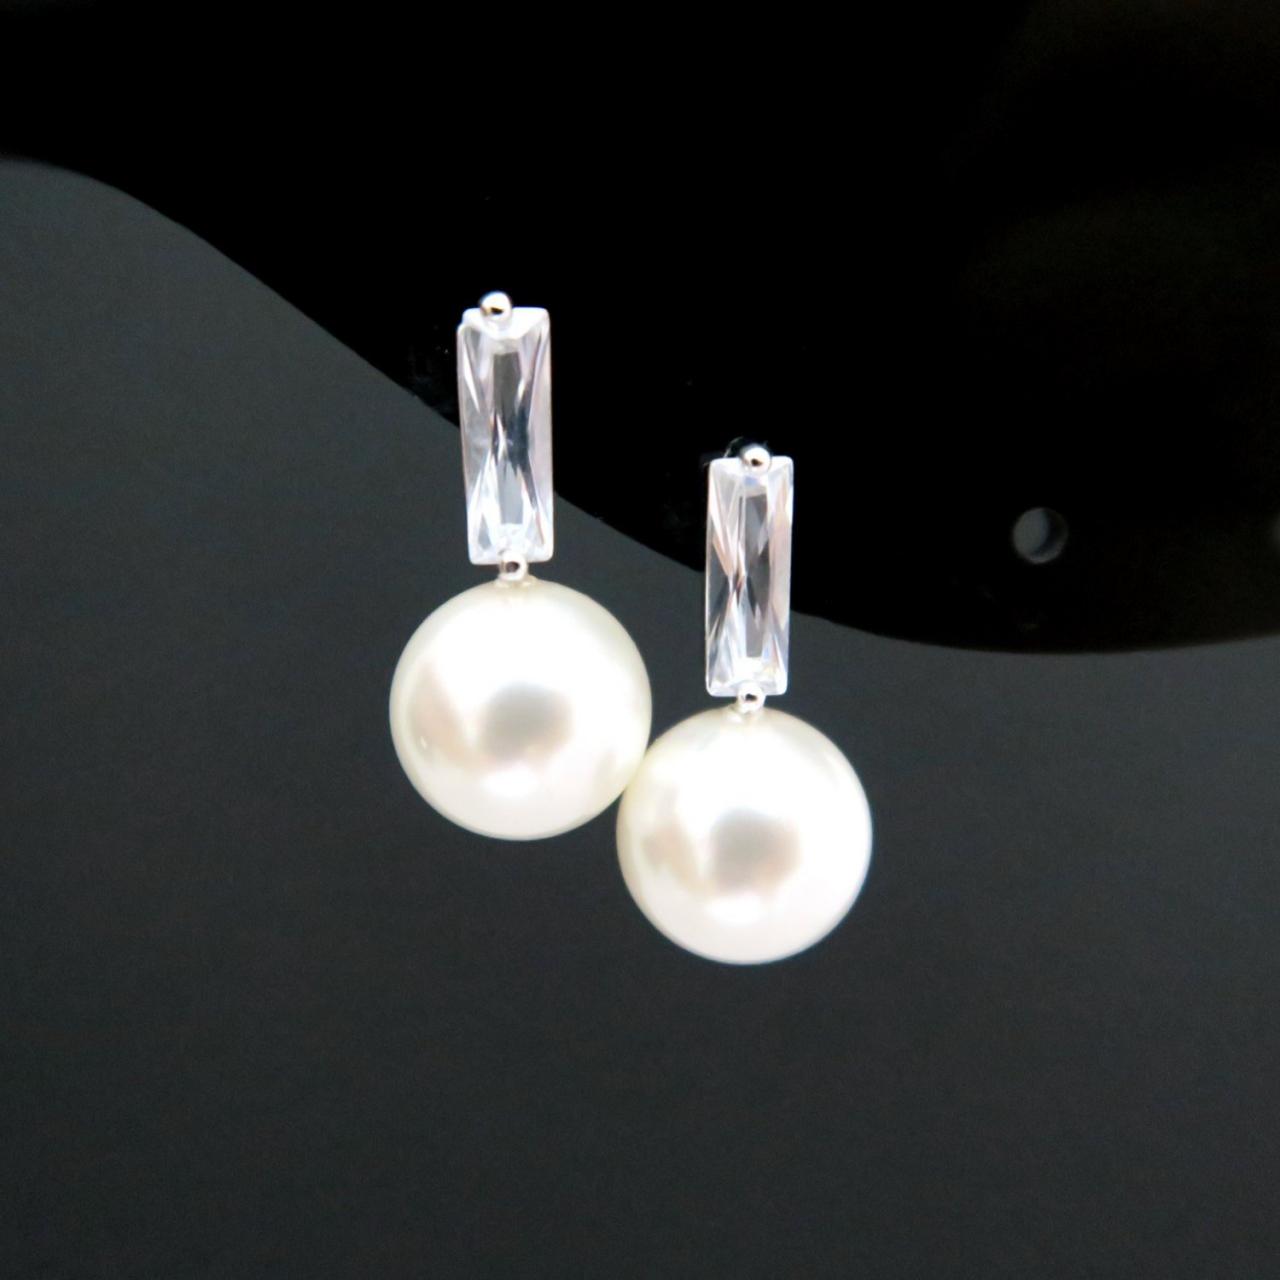 Pearl Earrings Swarovski 10mm Round Pearl Earrings Cubic Zirconia Bar Stud Earrings Wedding Jewelry Bridesmaids Gift (e162)